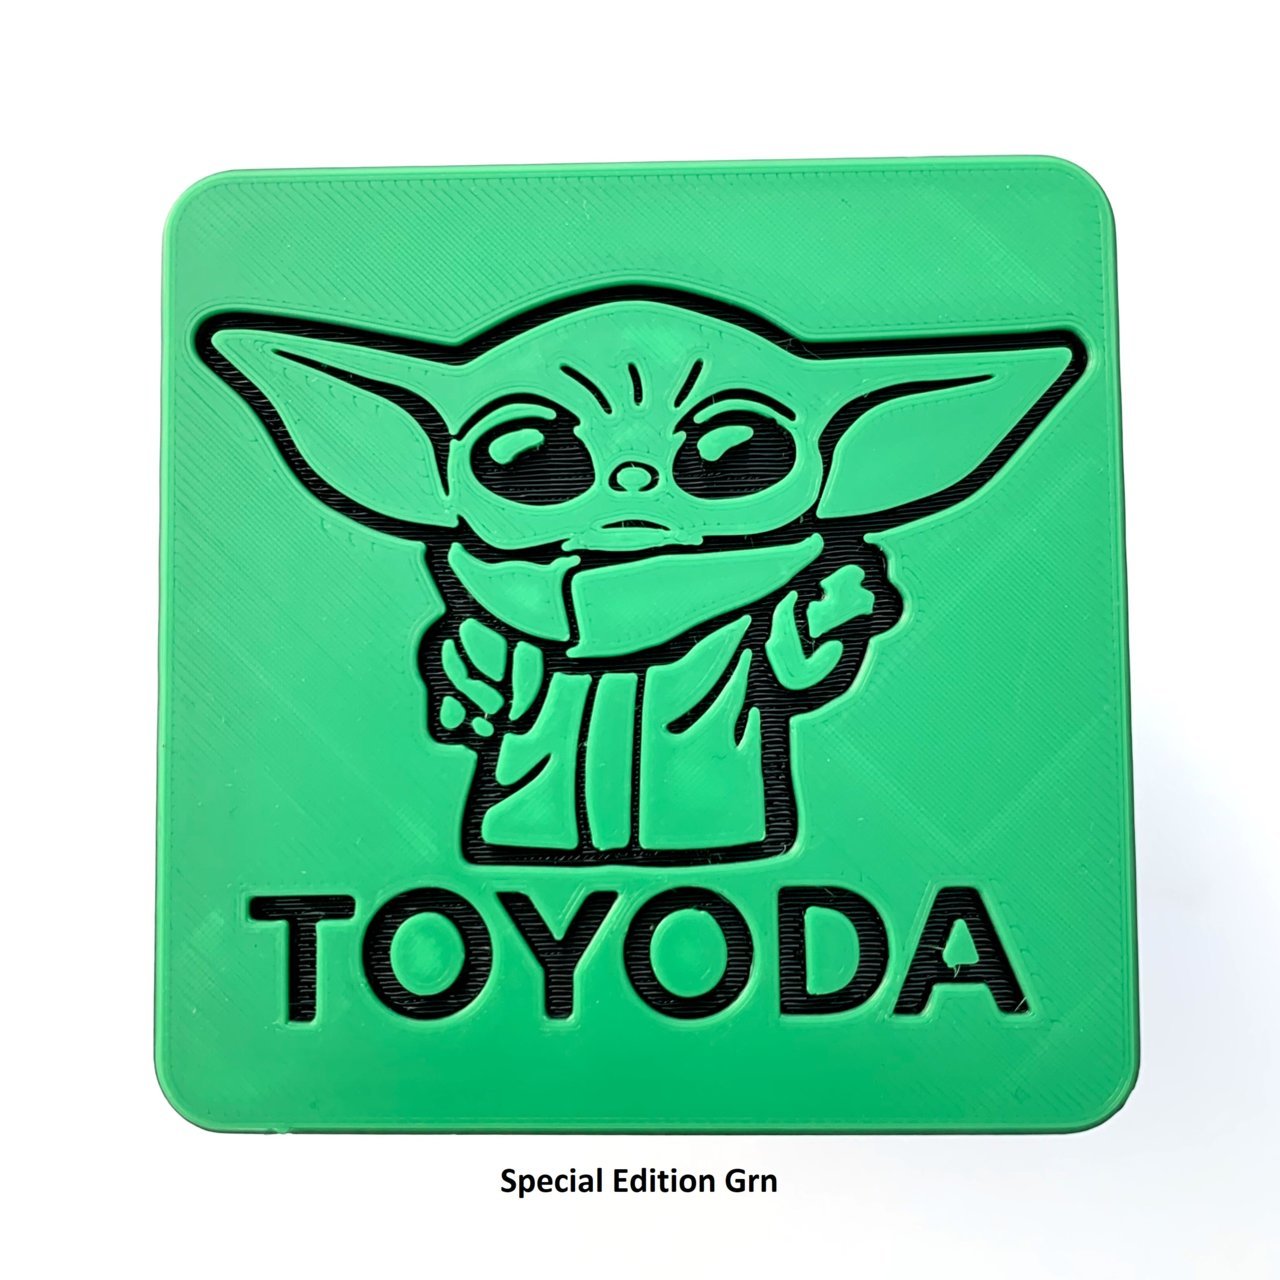 Toyoda_Front_Green_Blk.jpg